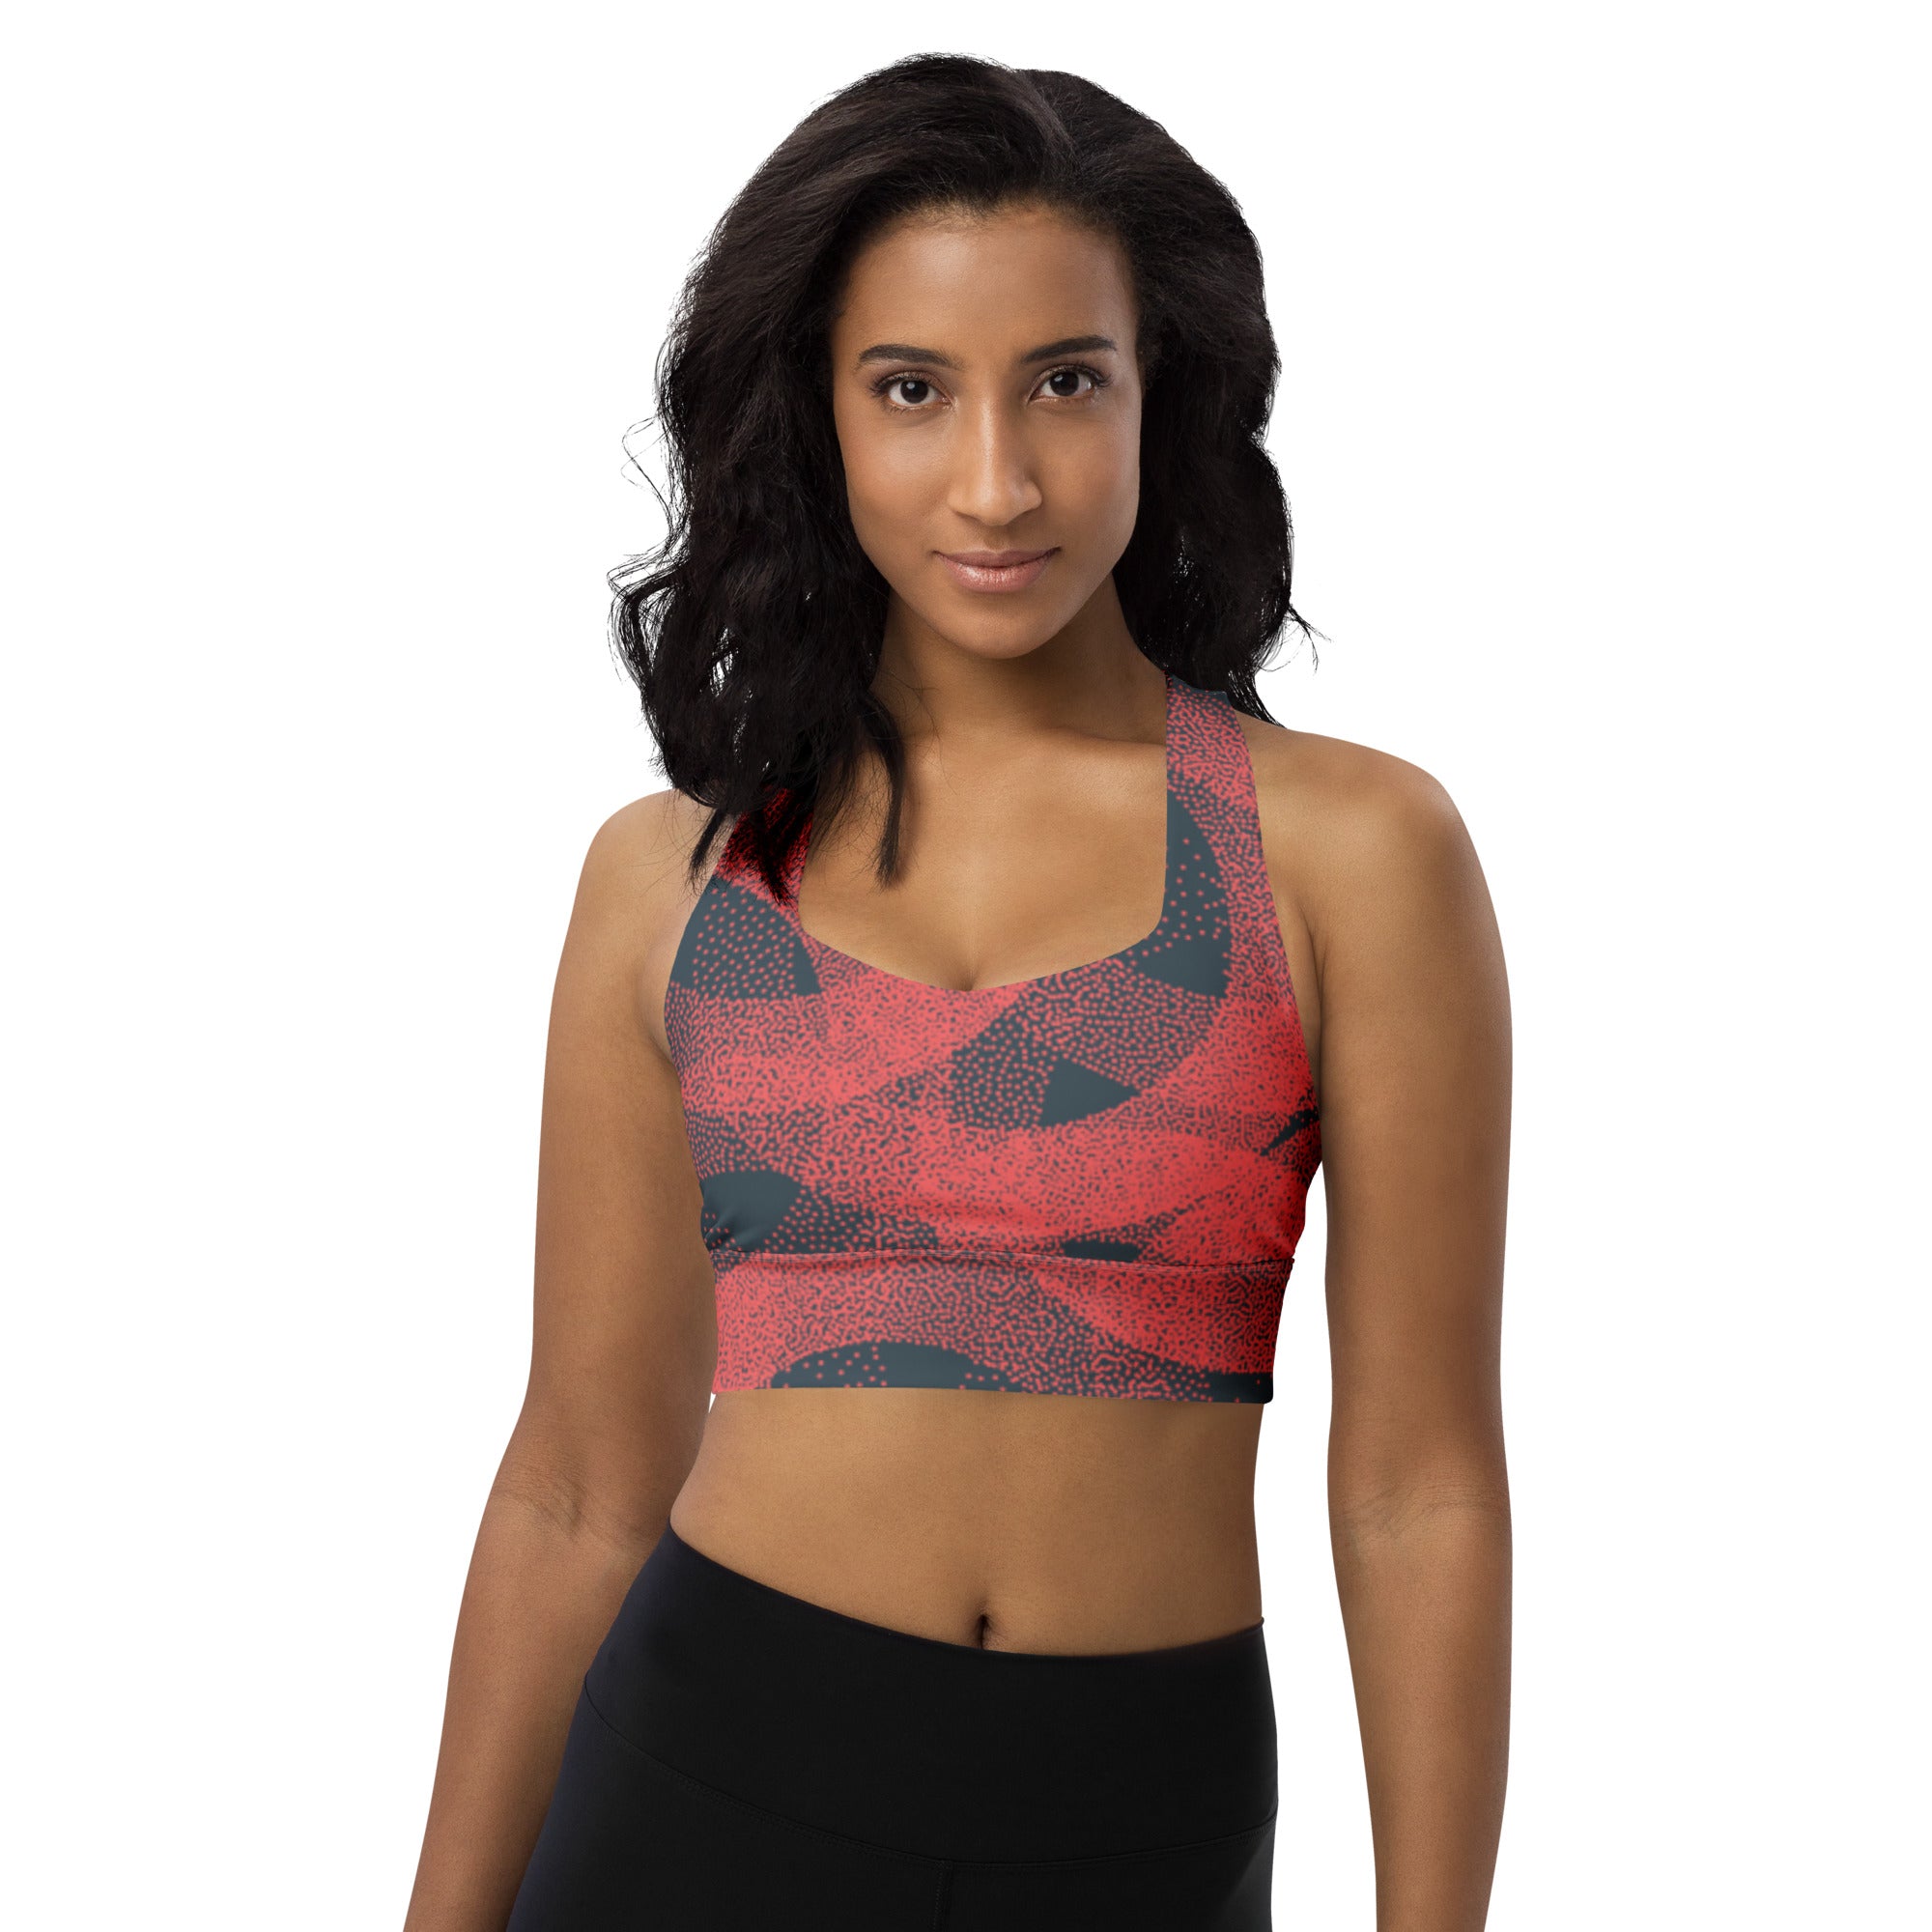 Red/Black sports bra